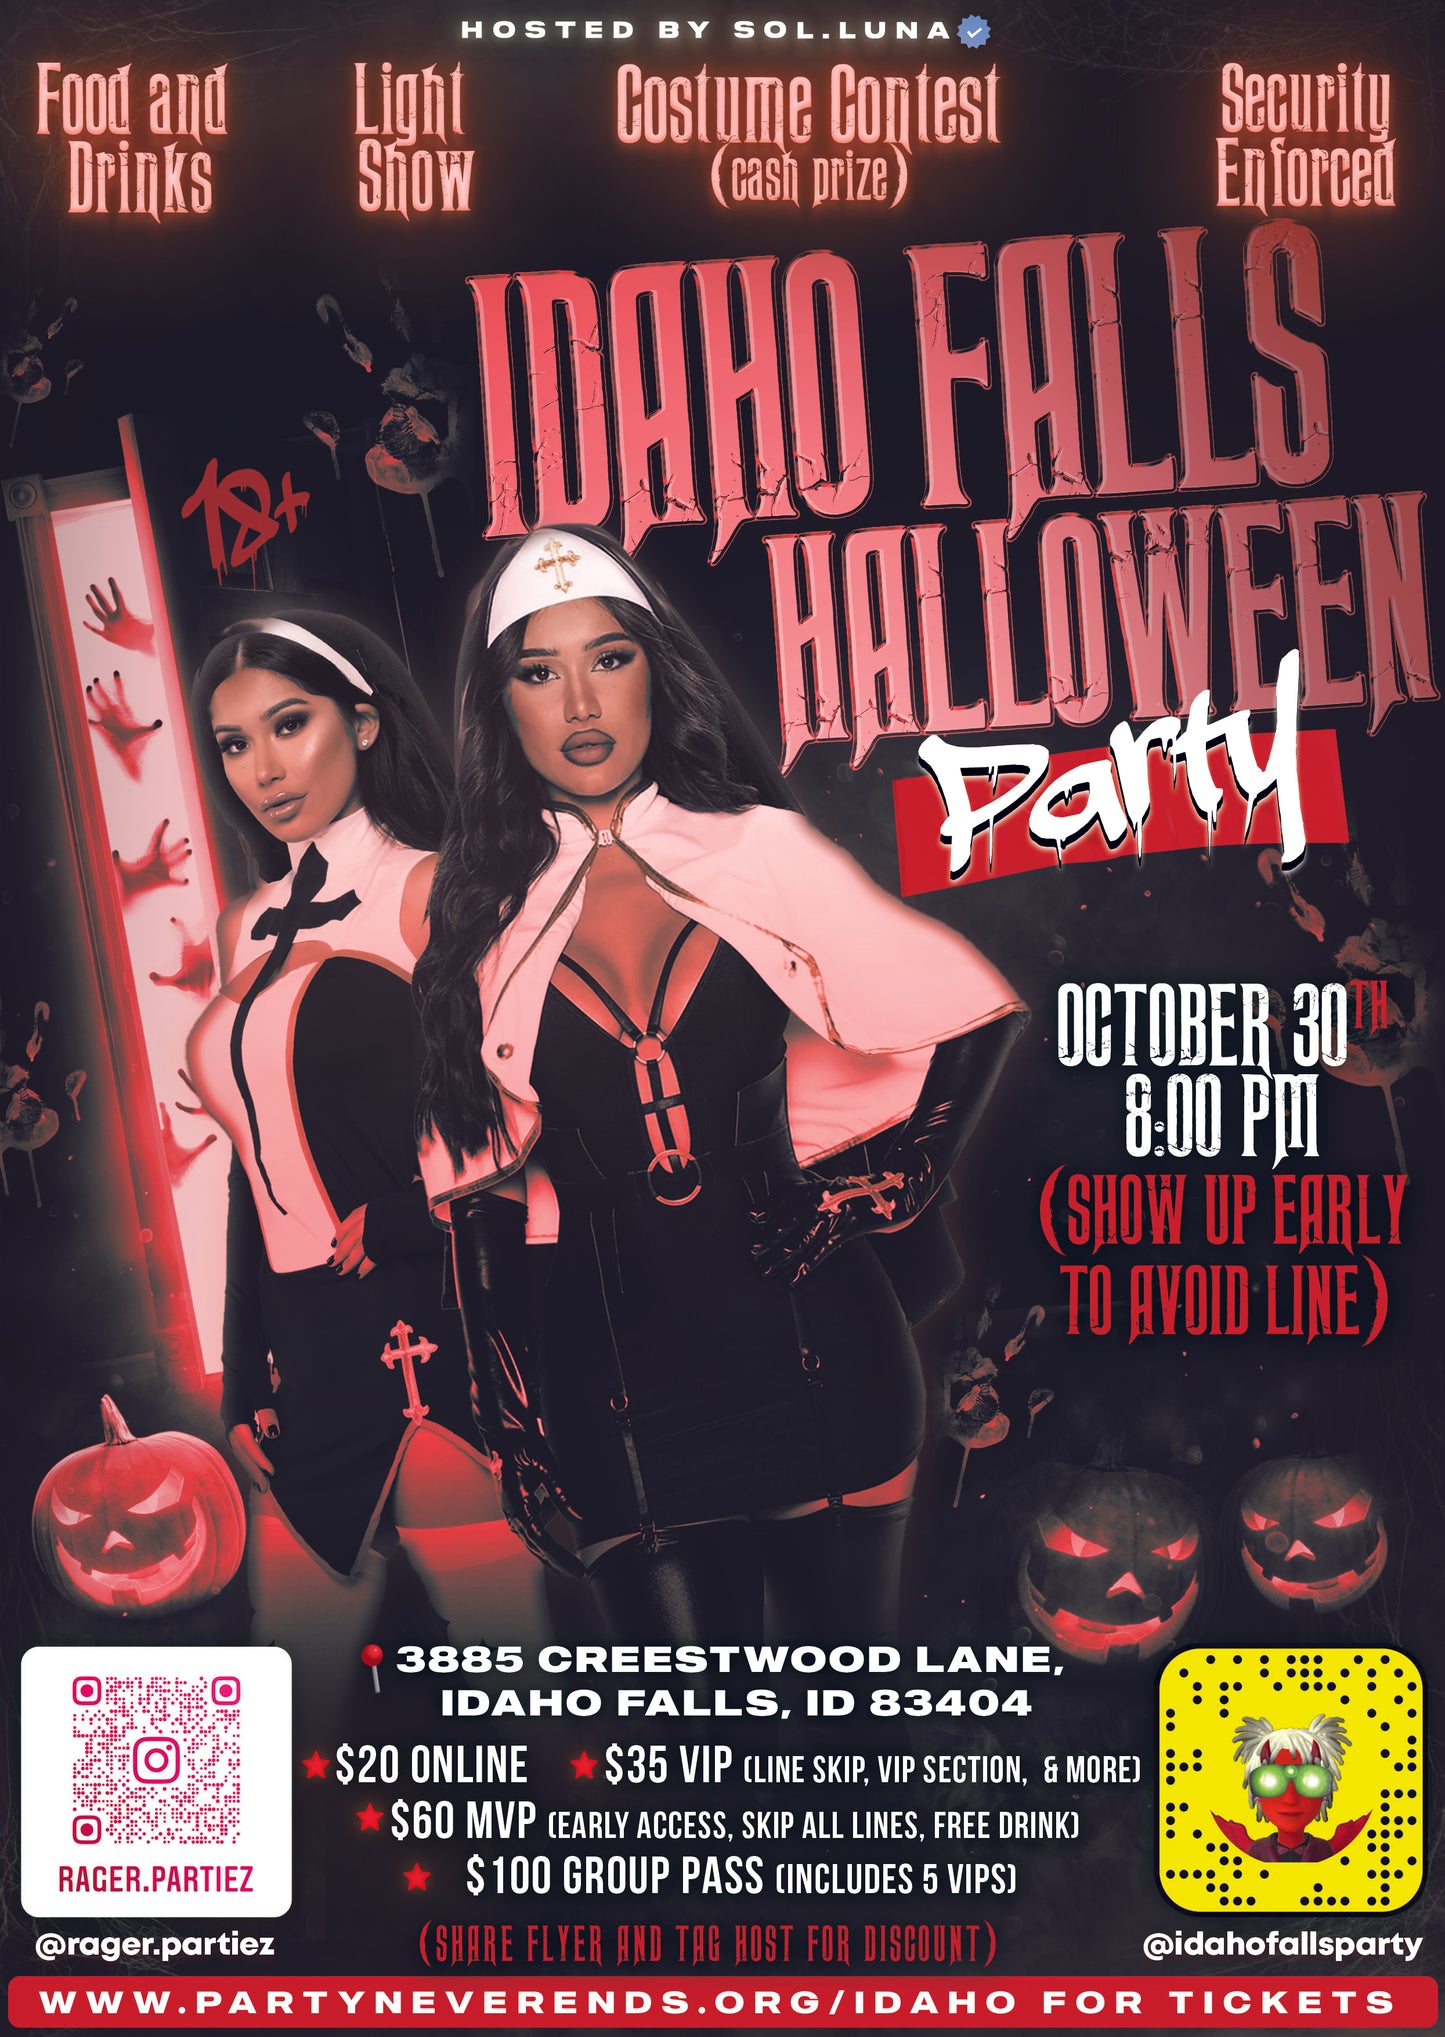 Idaho Falls Halloween Party VIP